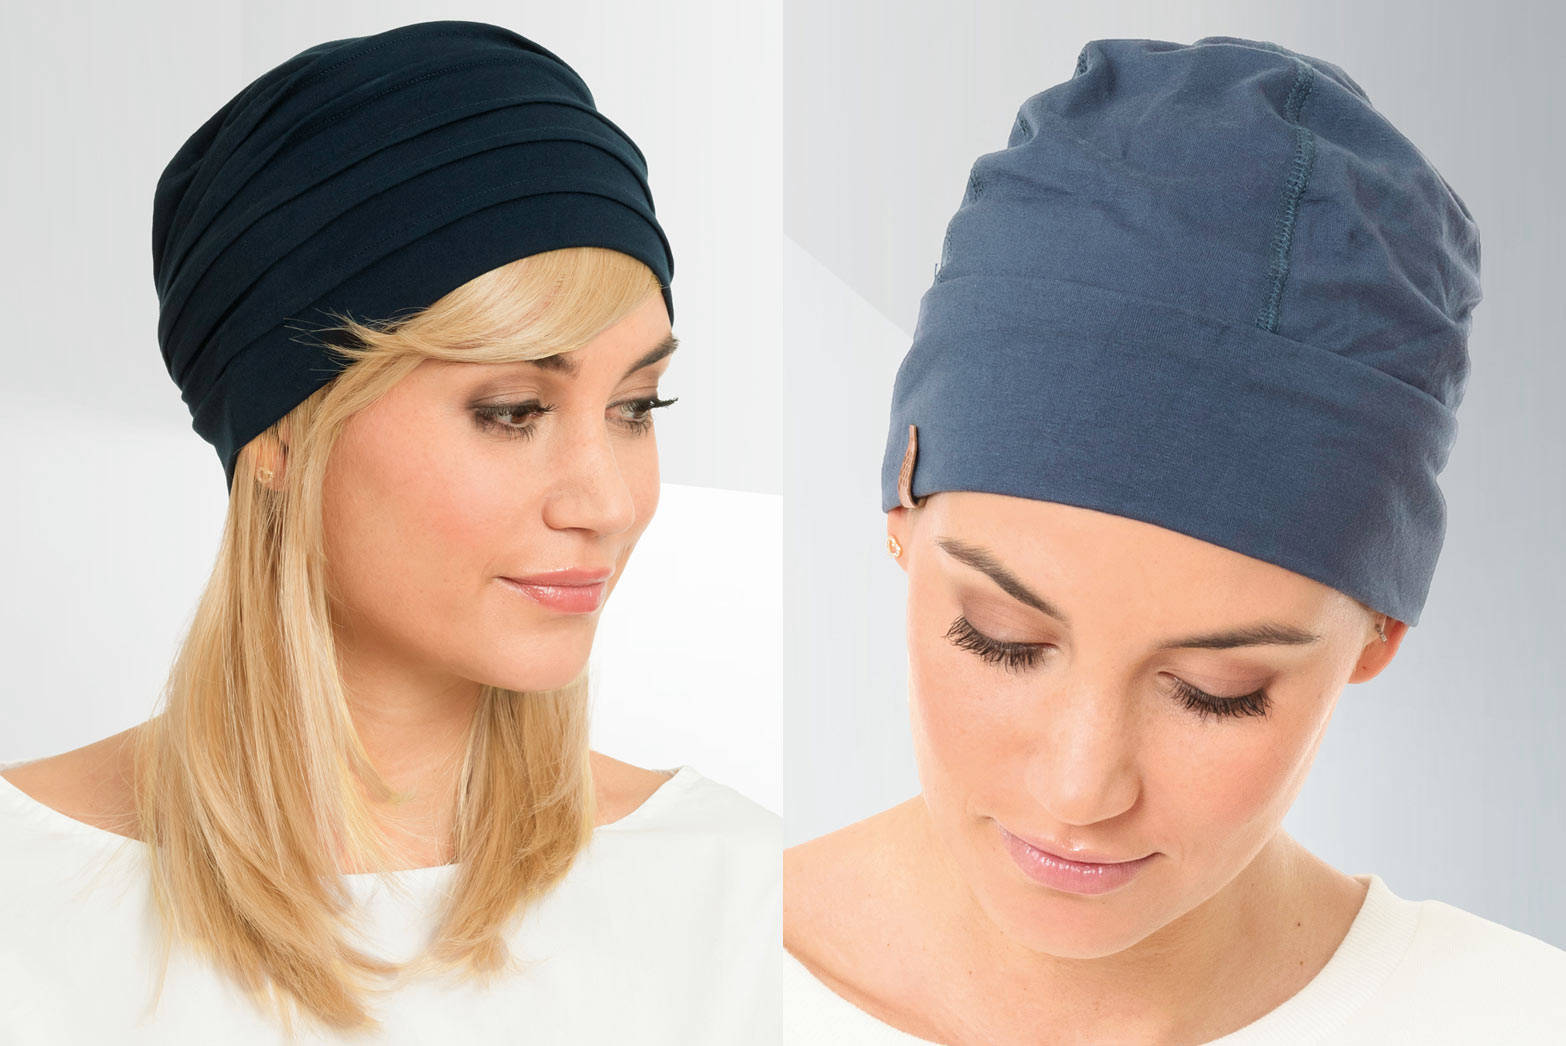 activ headwear turbans 003